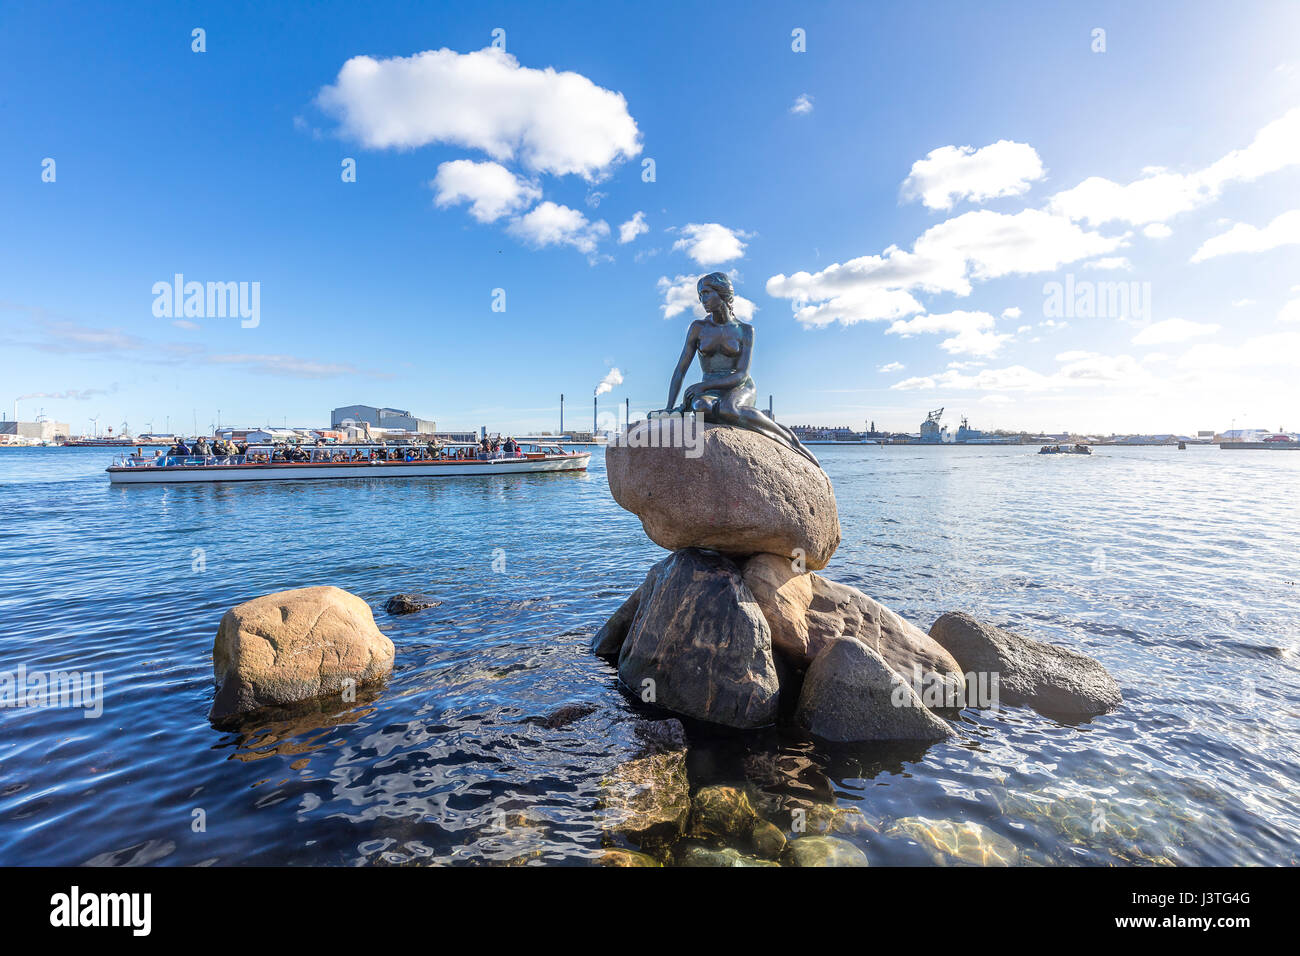 View of the Little mermaid statue in Copenhagen Denmark Stock Photo - Alamy